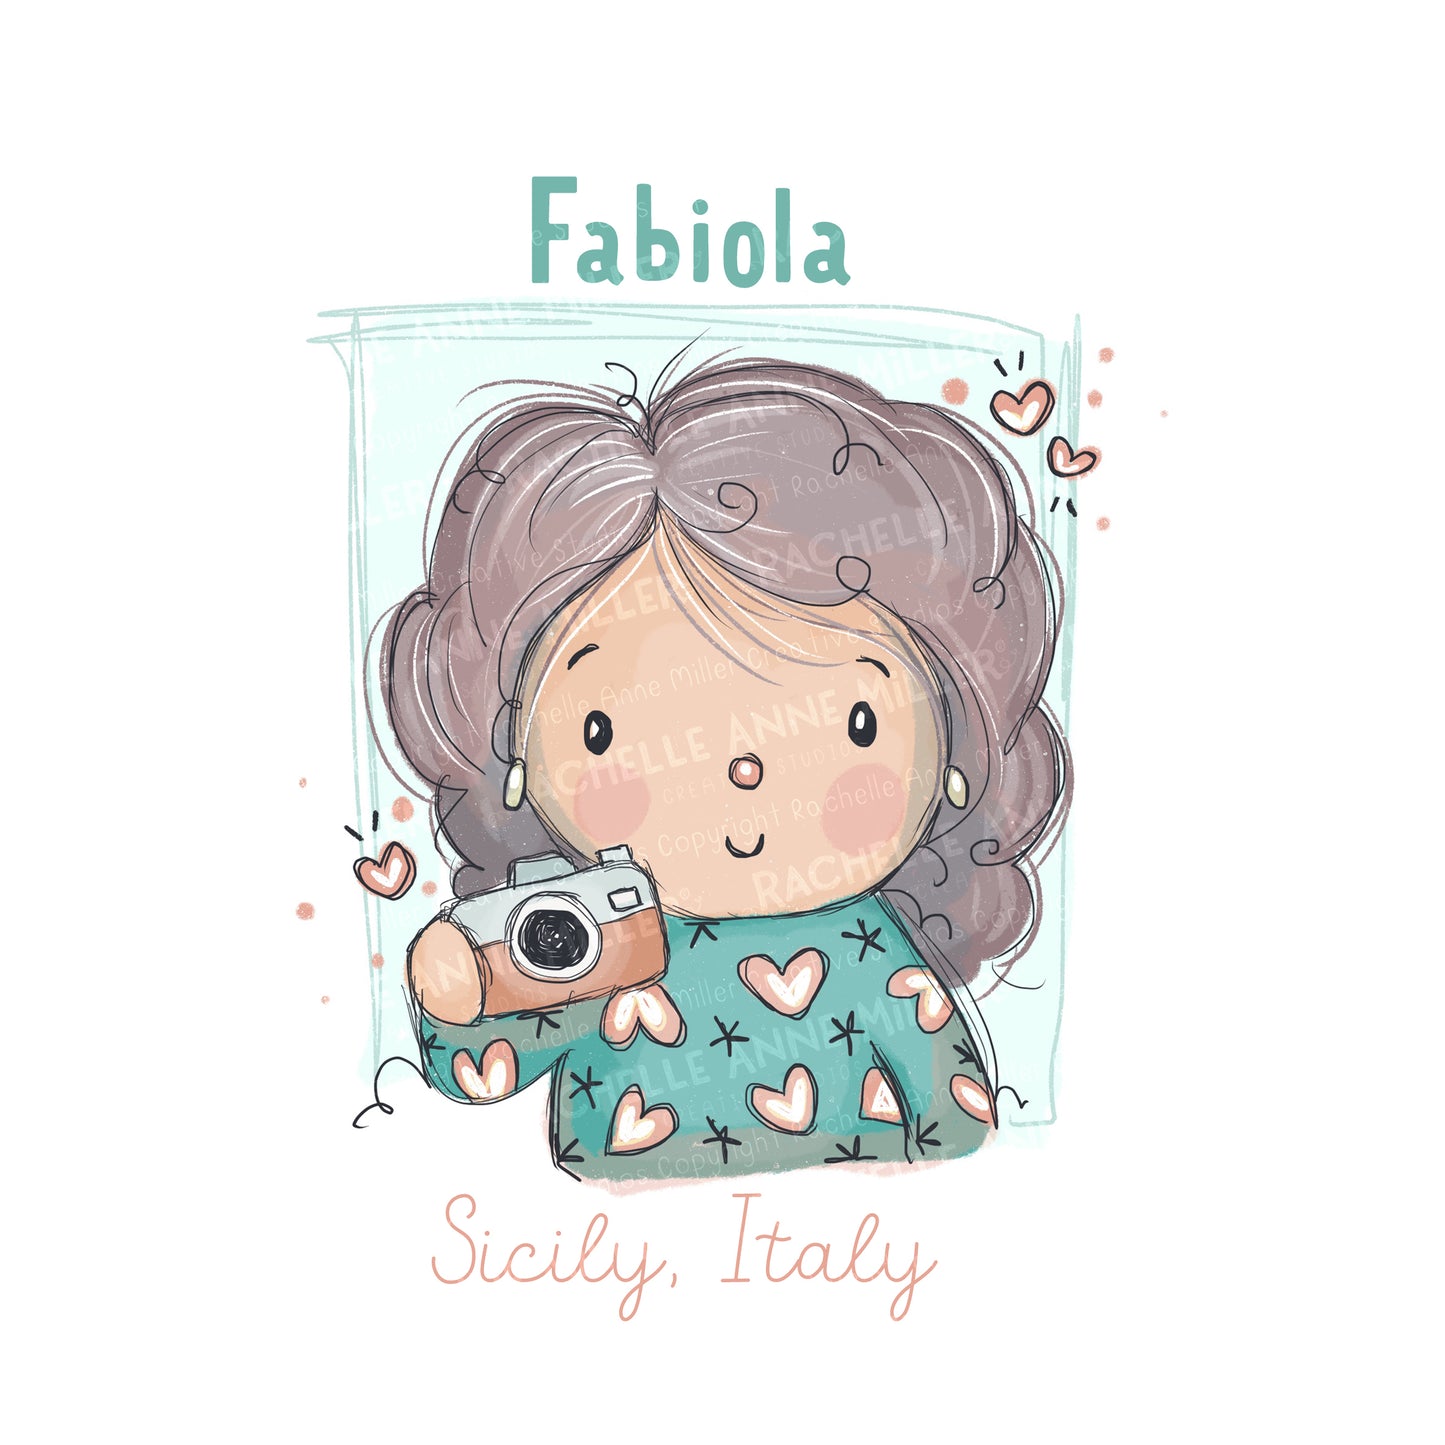 'Fabiola's Photography' Profile Digital Stamp